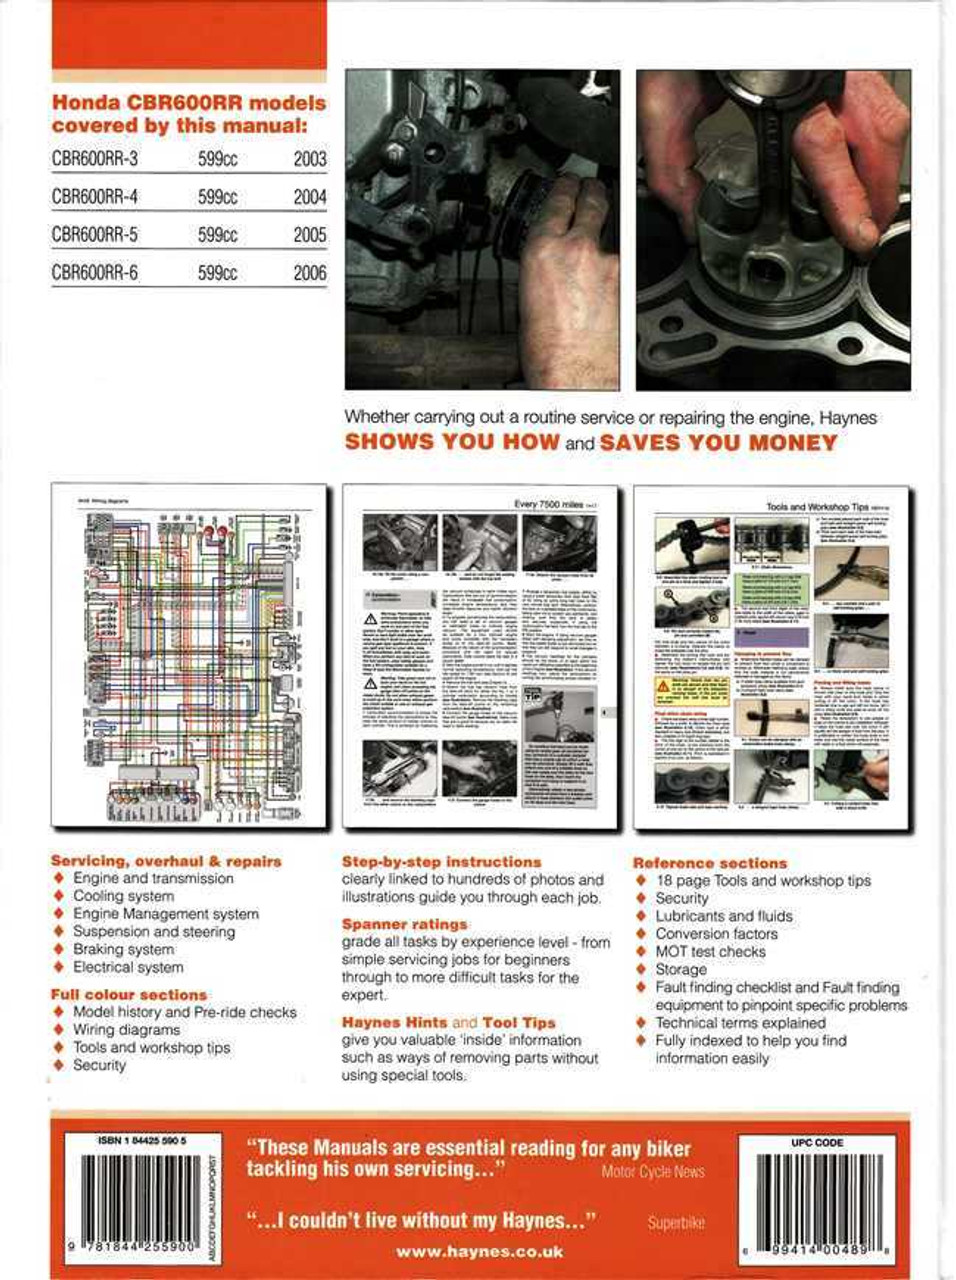 Wiring Diagram PDF: 2003 Cbr 600 Wiring Diagram